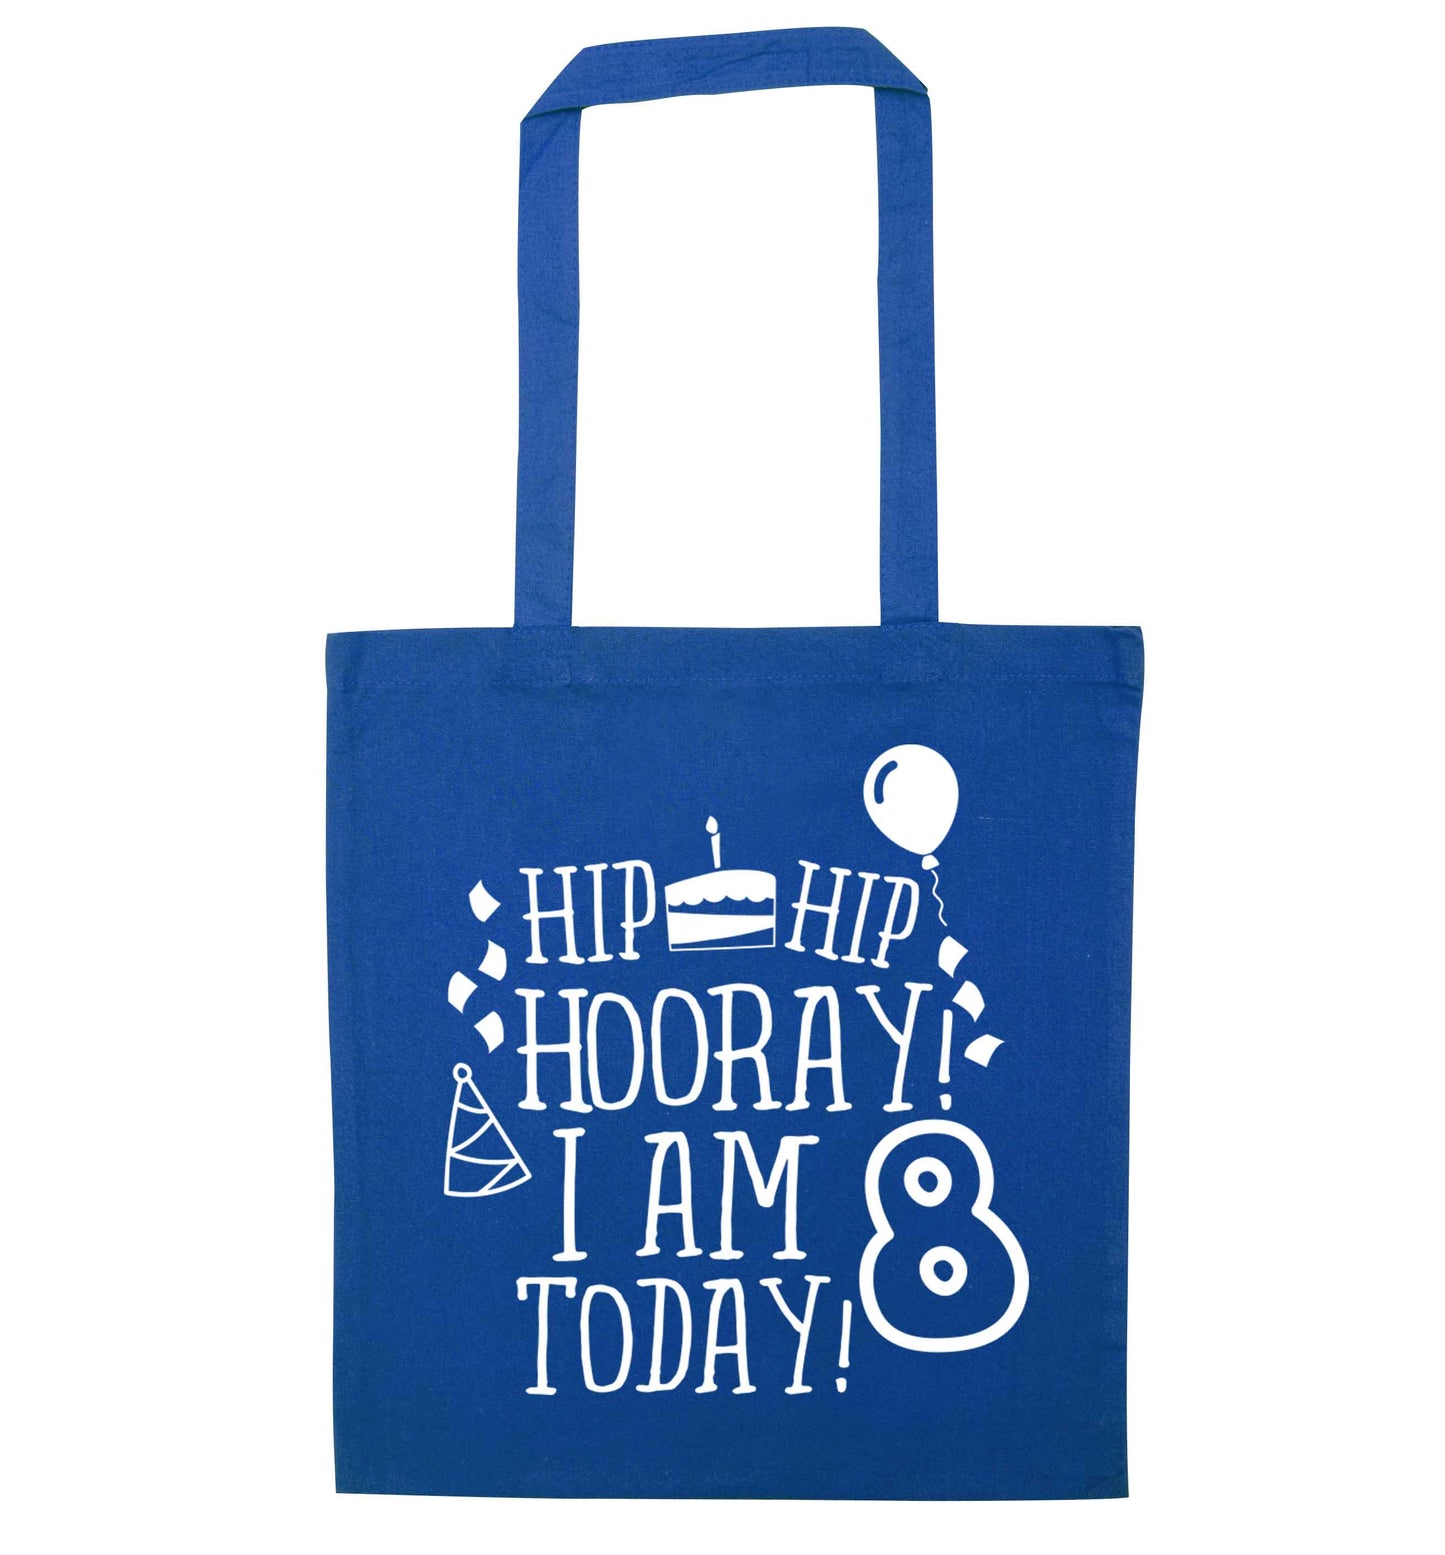 Hip hip hooray I am 8 today! blue tote bag